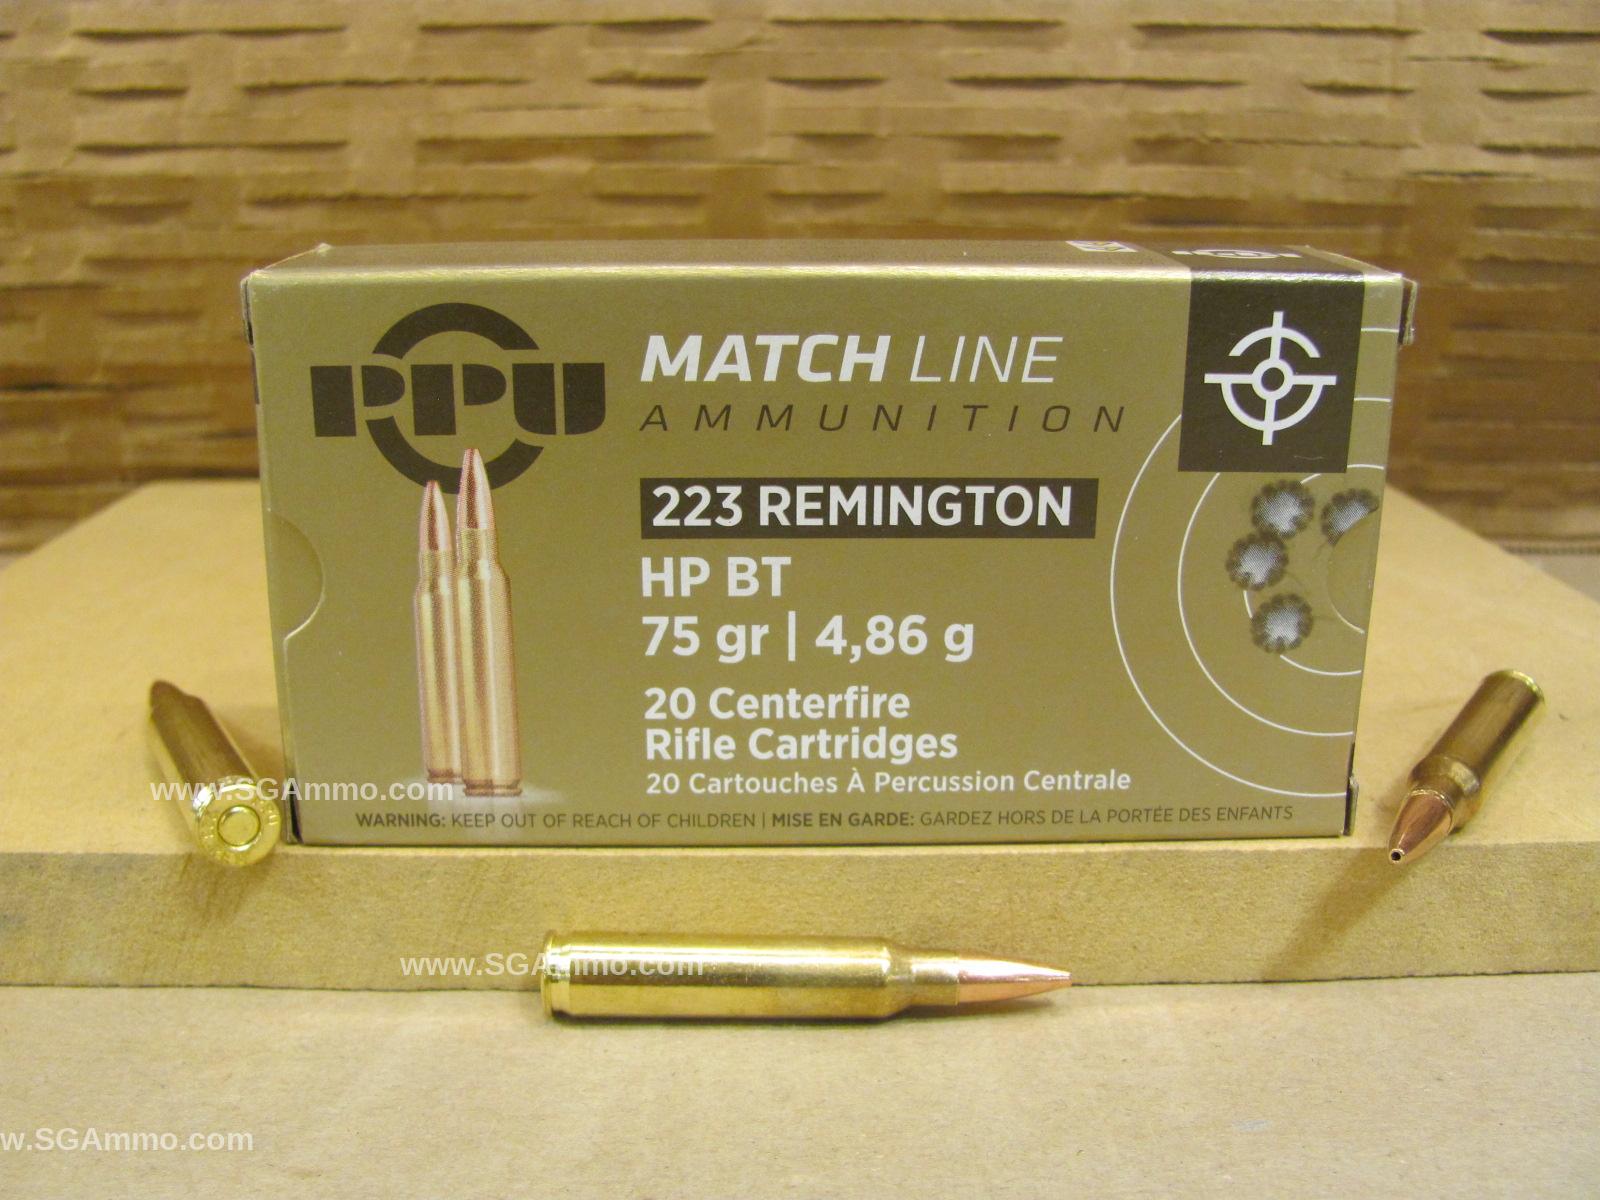 223 Reloading Bullets - Match Grade - $82 per 1,000